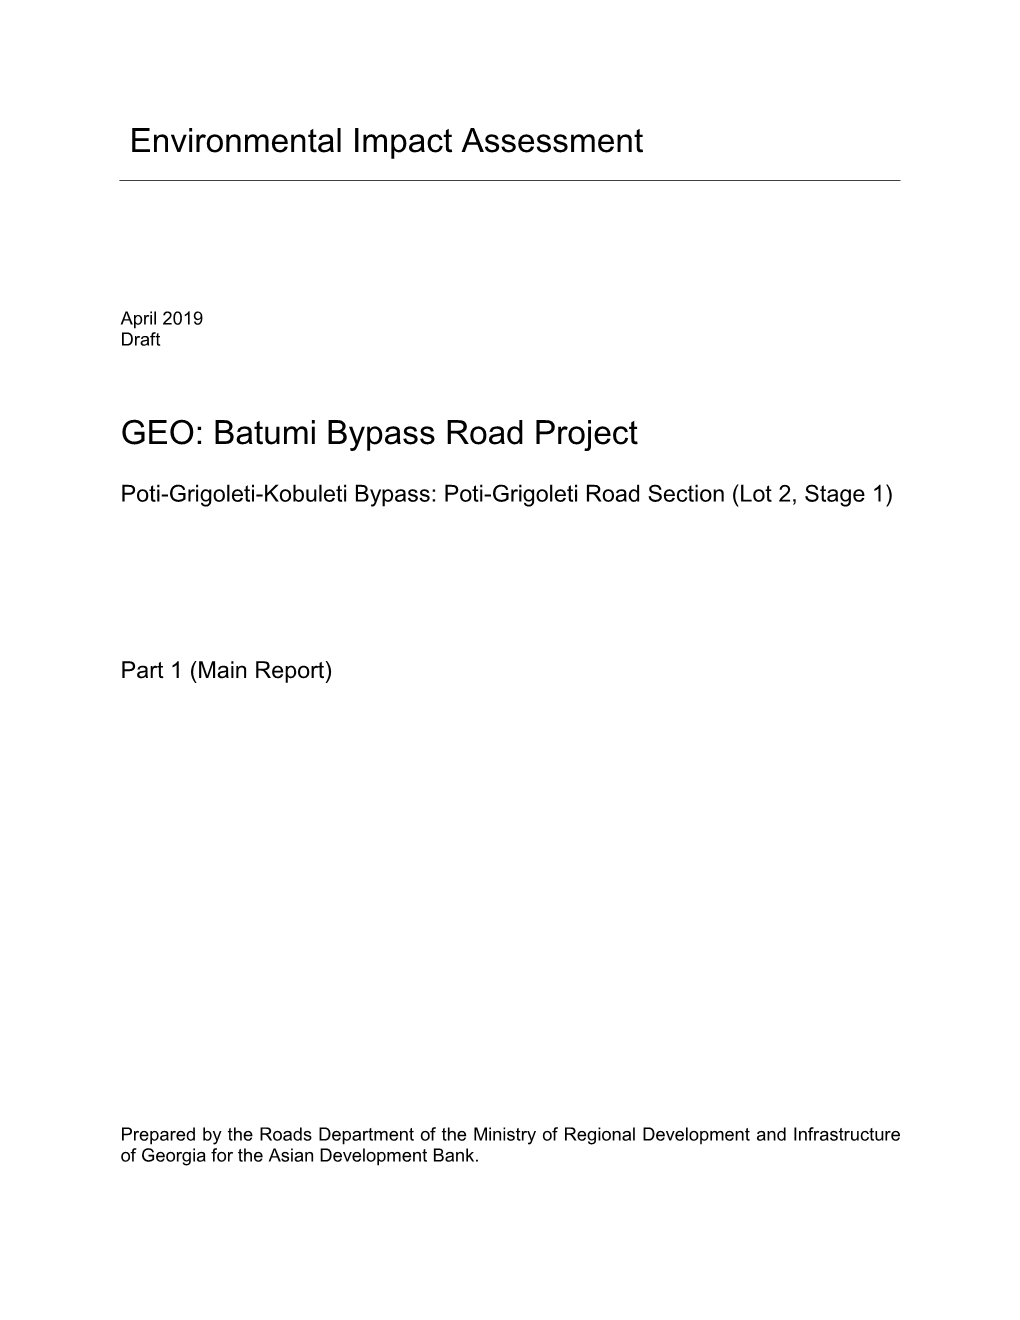 Environmental Impact Assessment GEO: Batumi Bypass Road Project